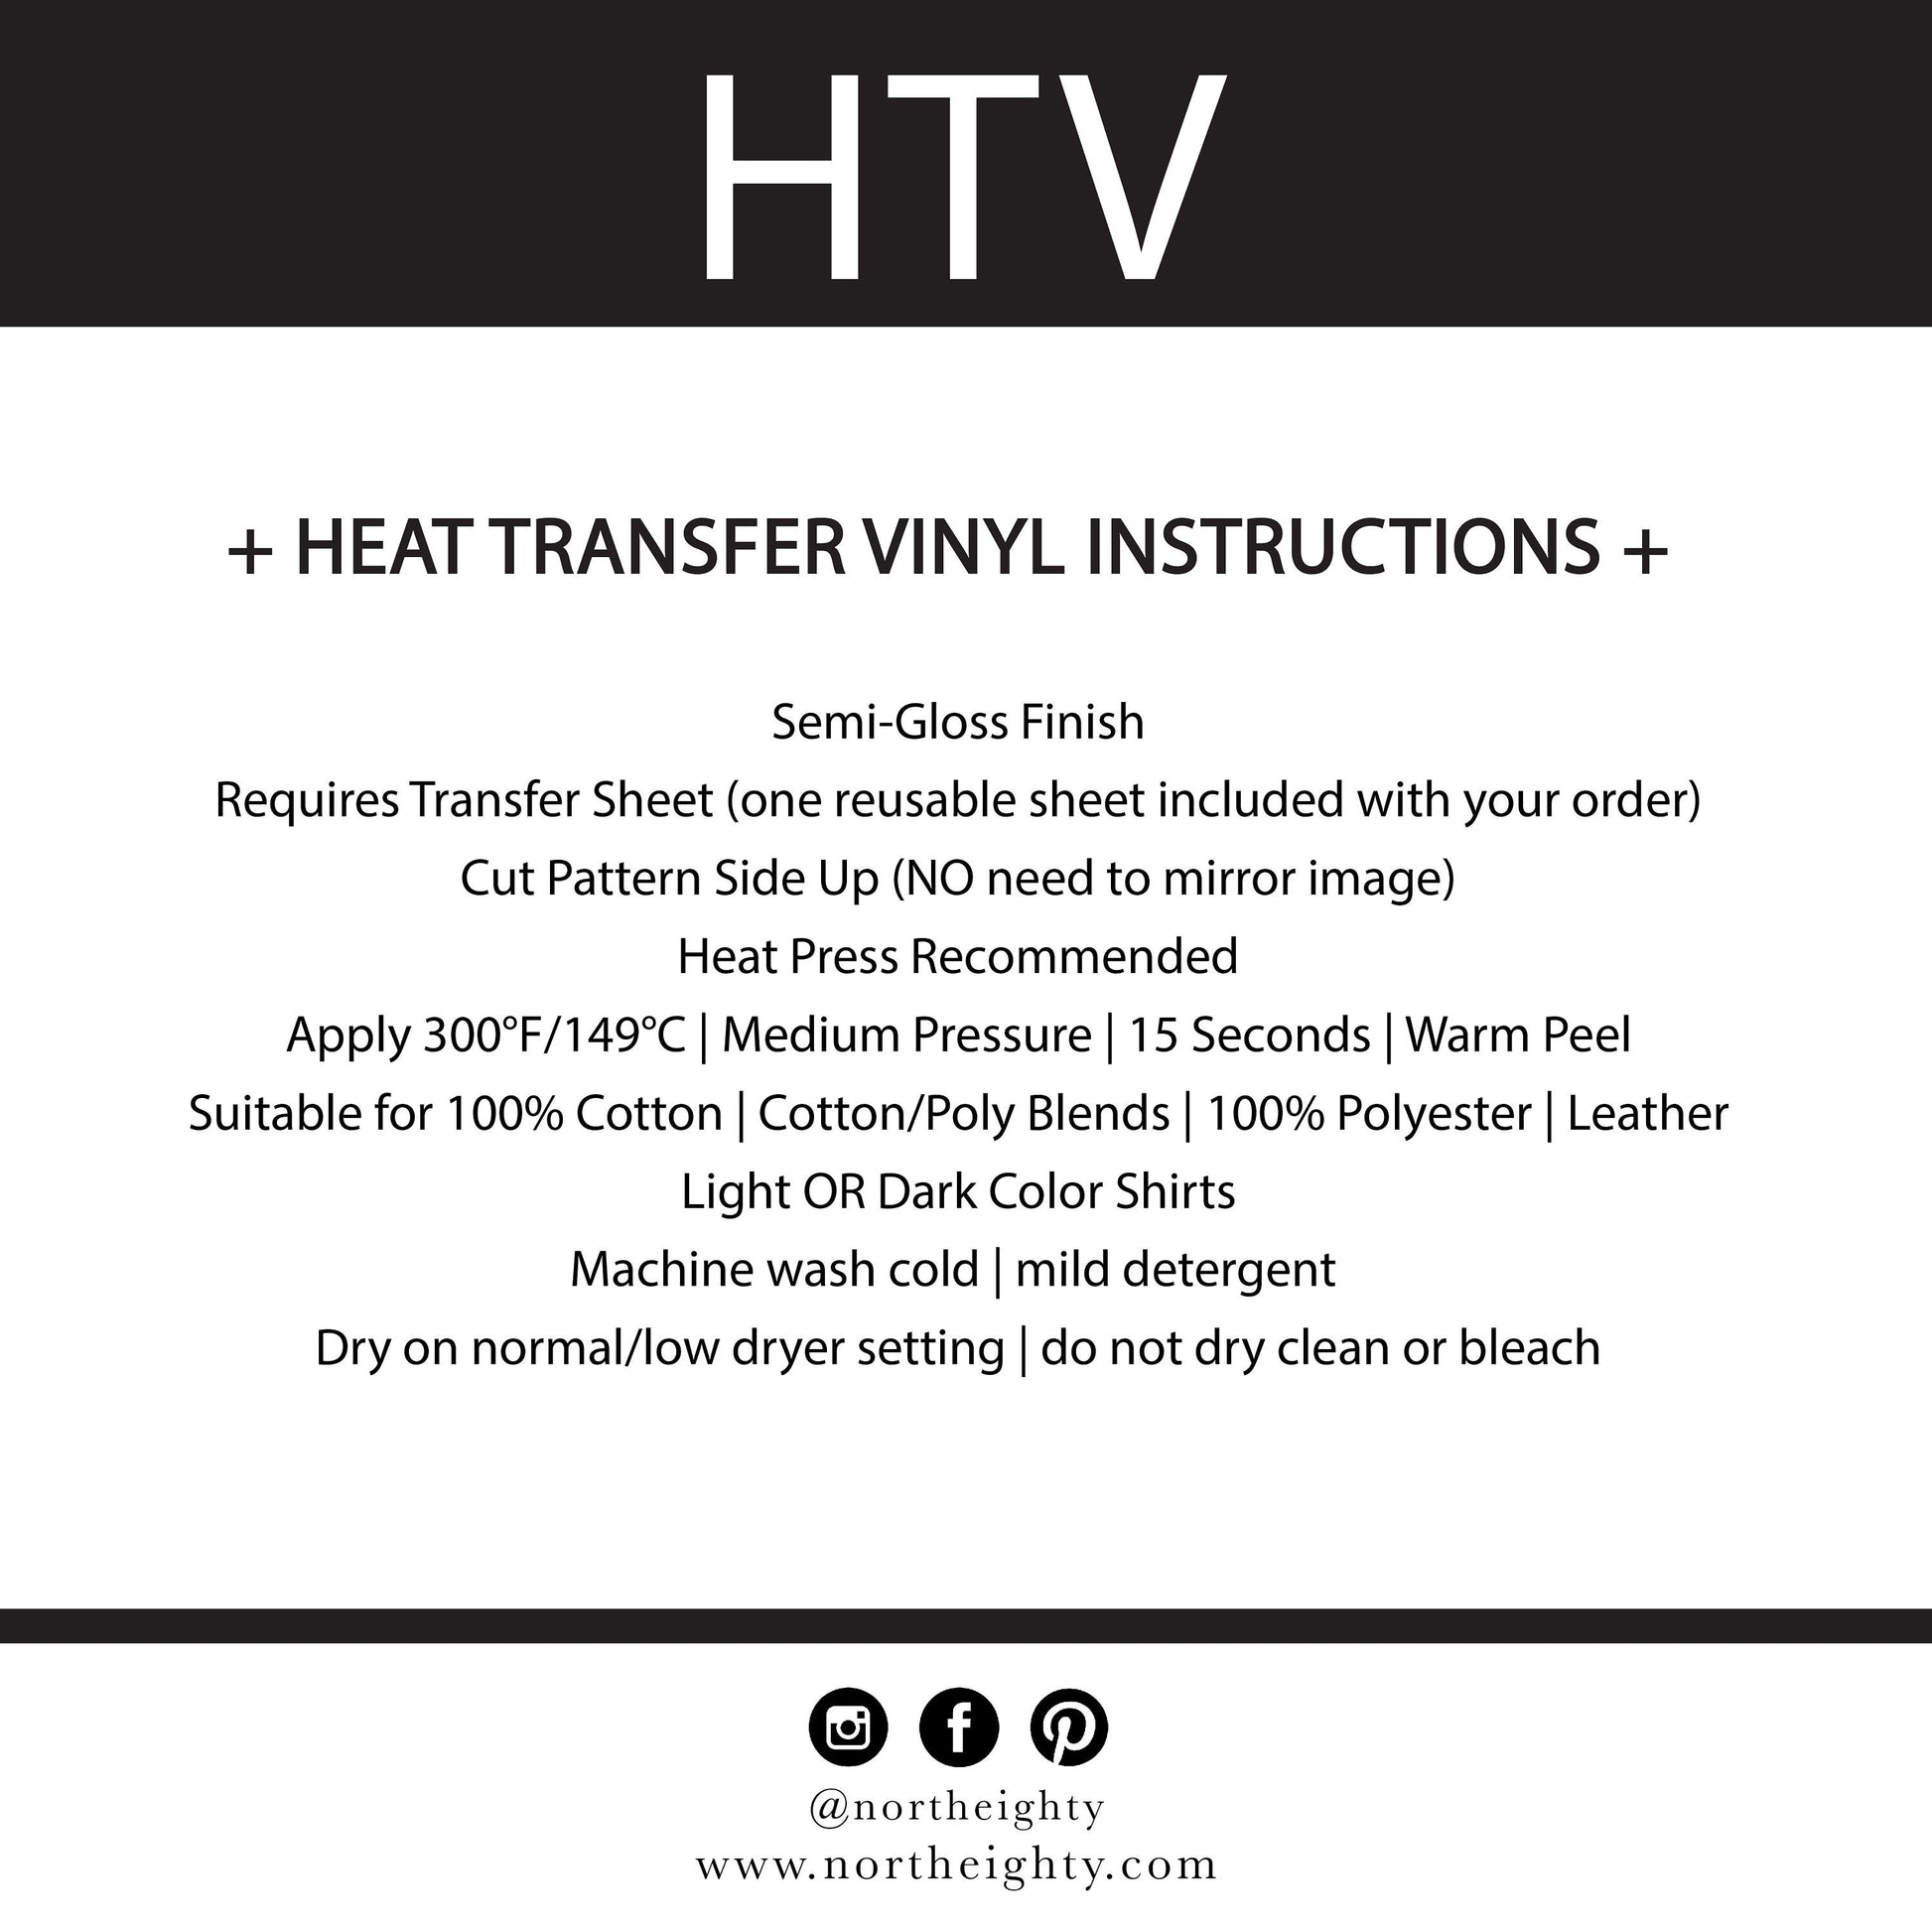 Easter htv - Plaid Heat Transfer Vinyl - Plaid Printed Vinyl - Patterned Adhesive - Tartan Plaid - Checks - Spring